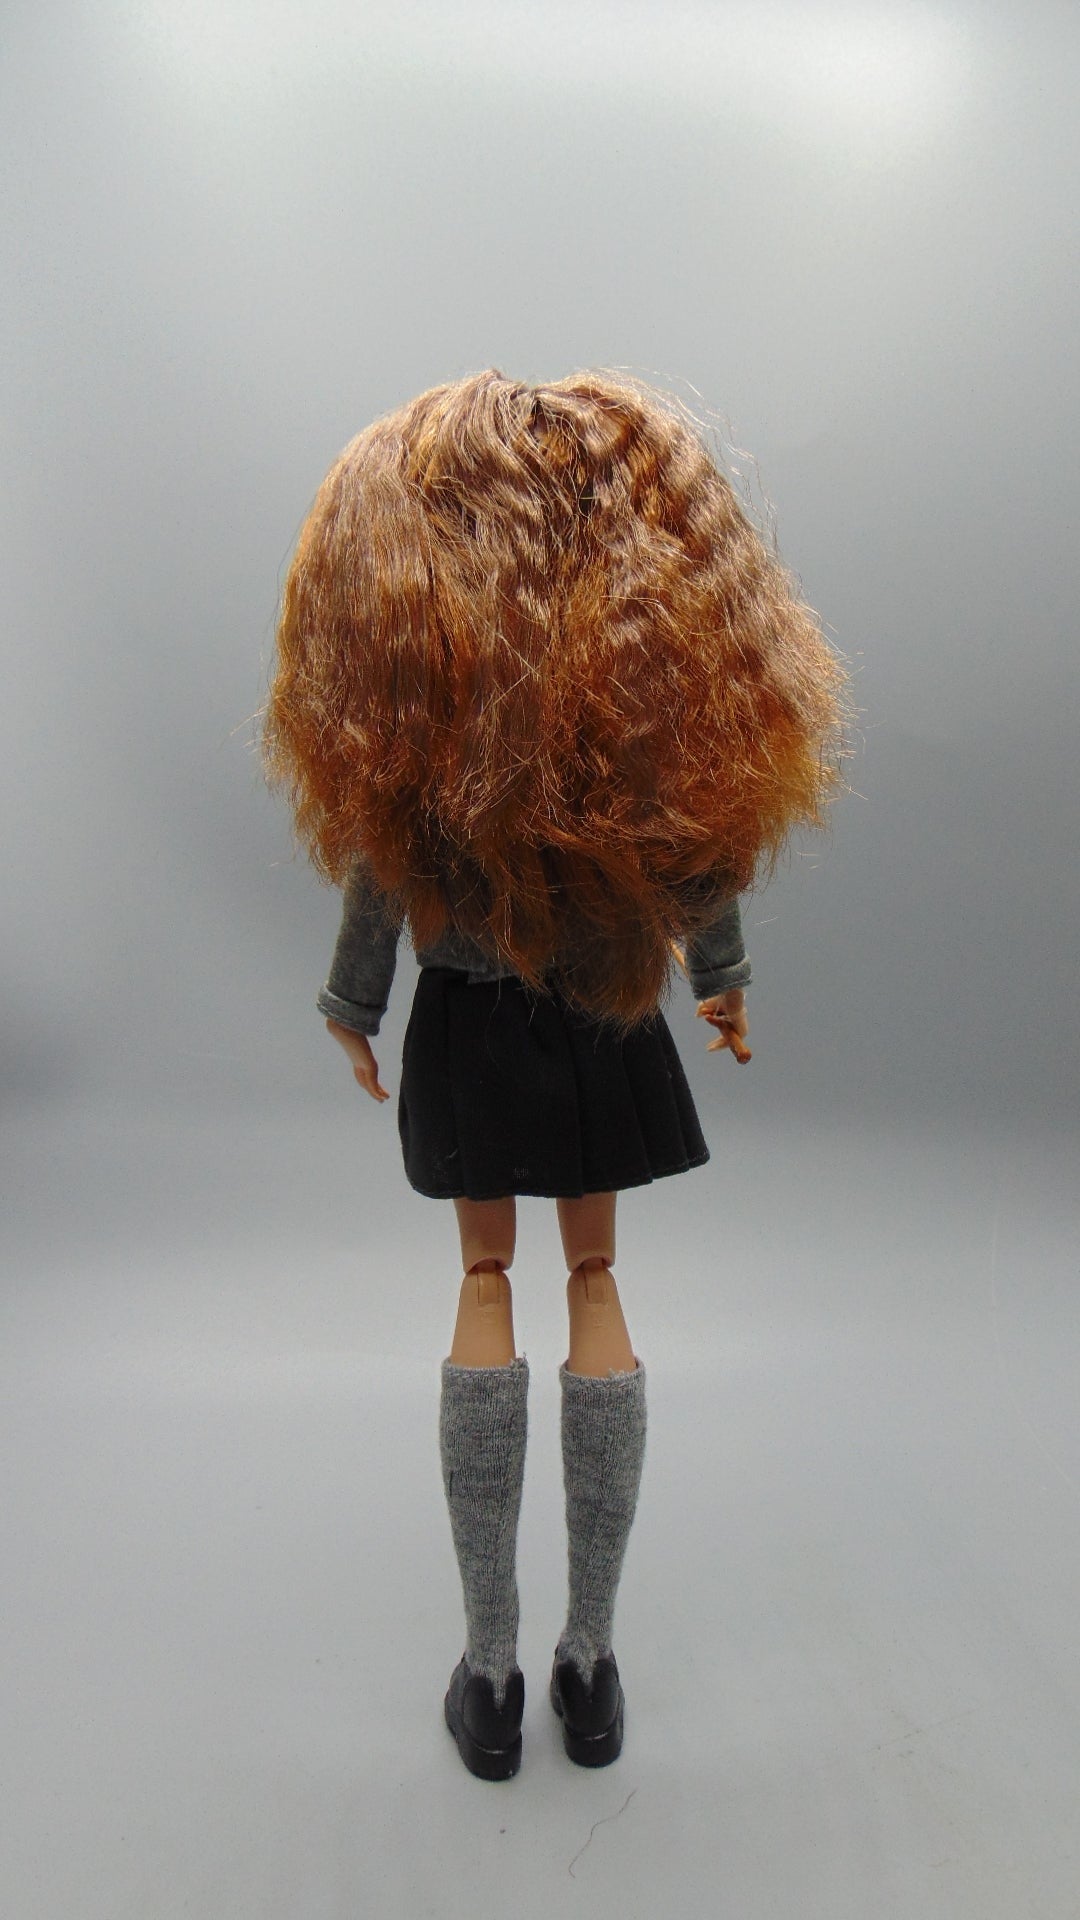 Hermione (Complete) Doll Mattel